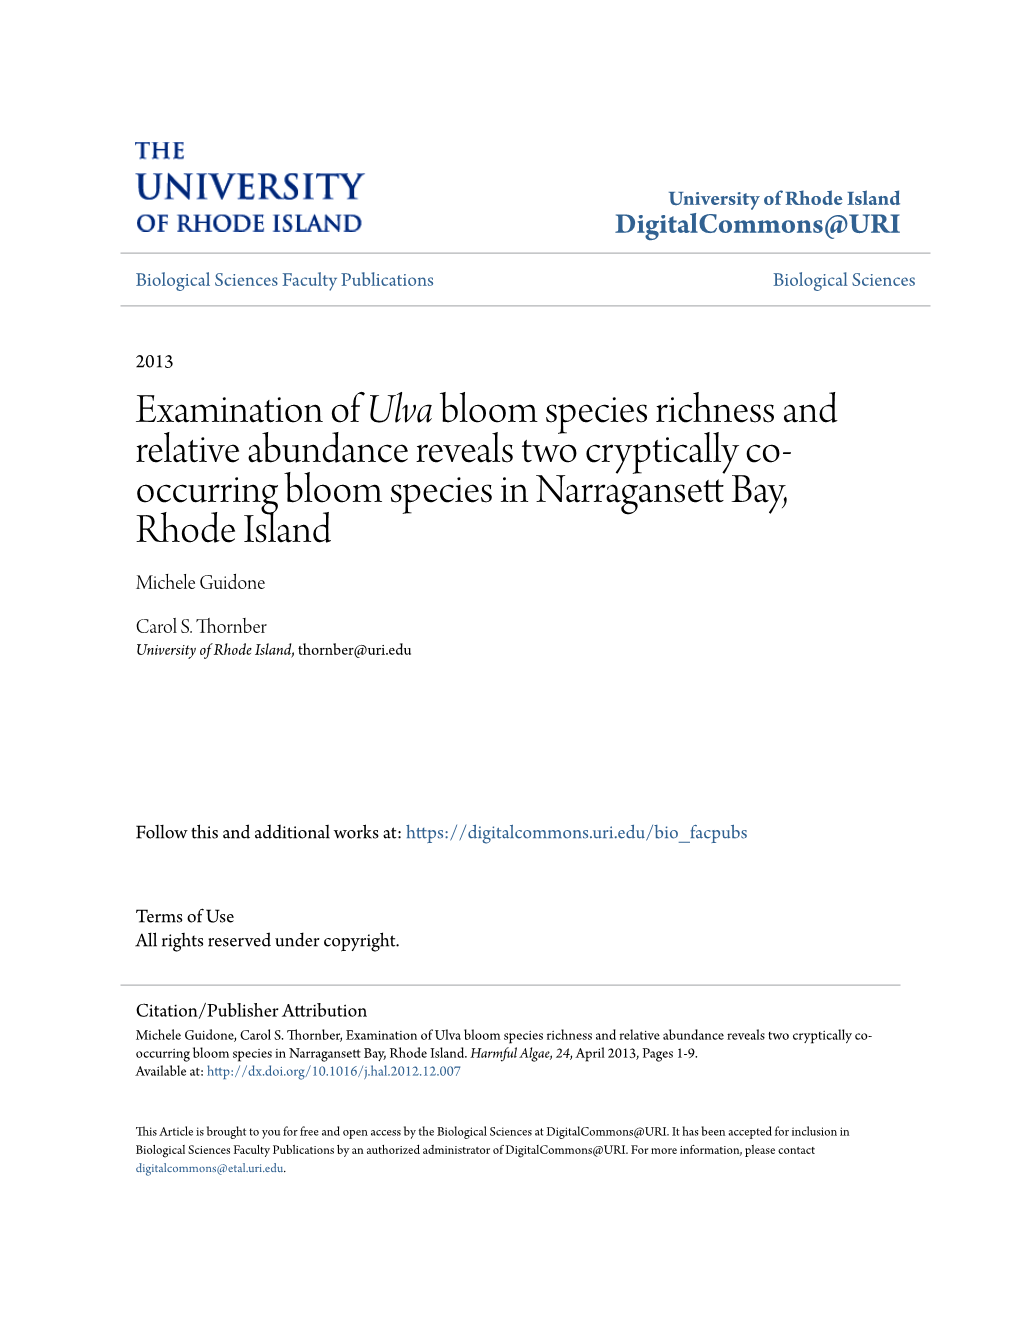 Examination of Ulva Bloom Species Richness and Relative Abundance